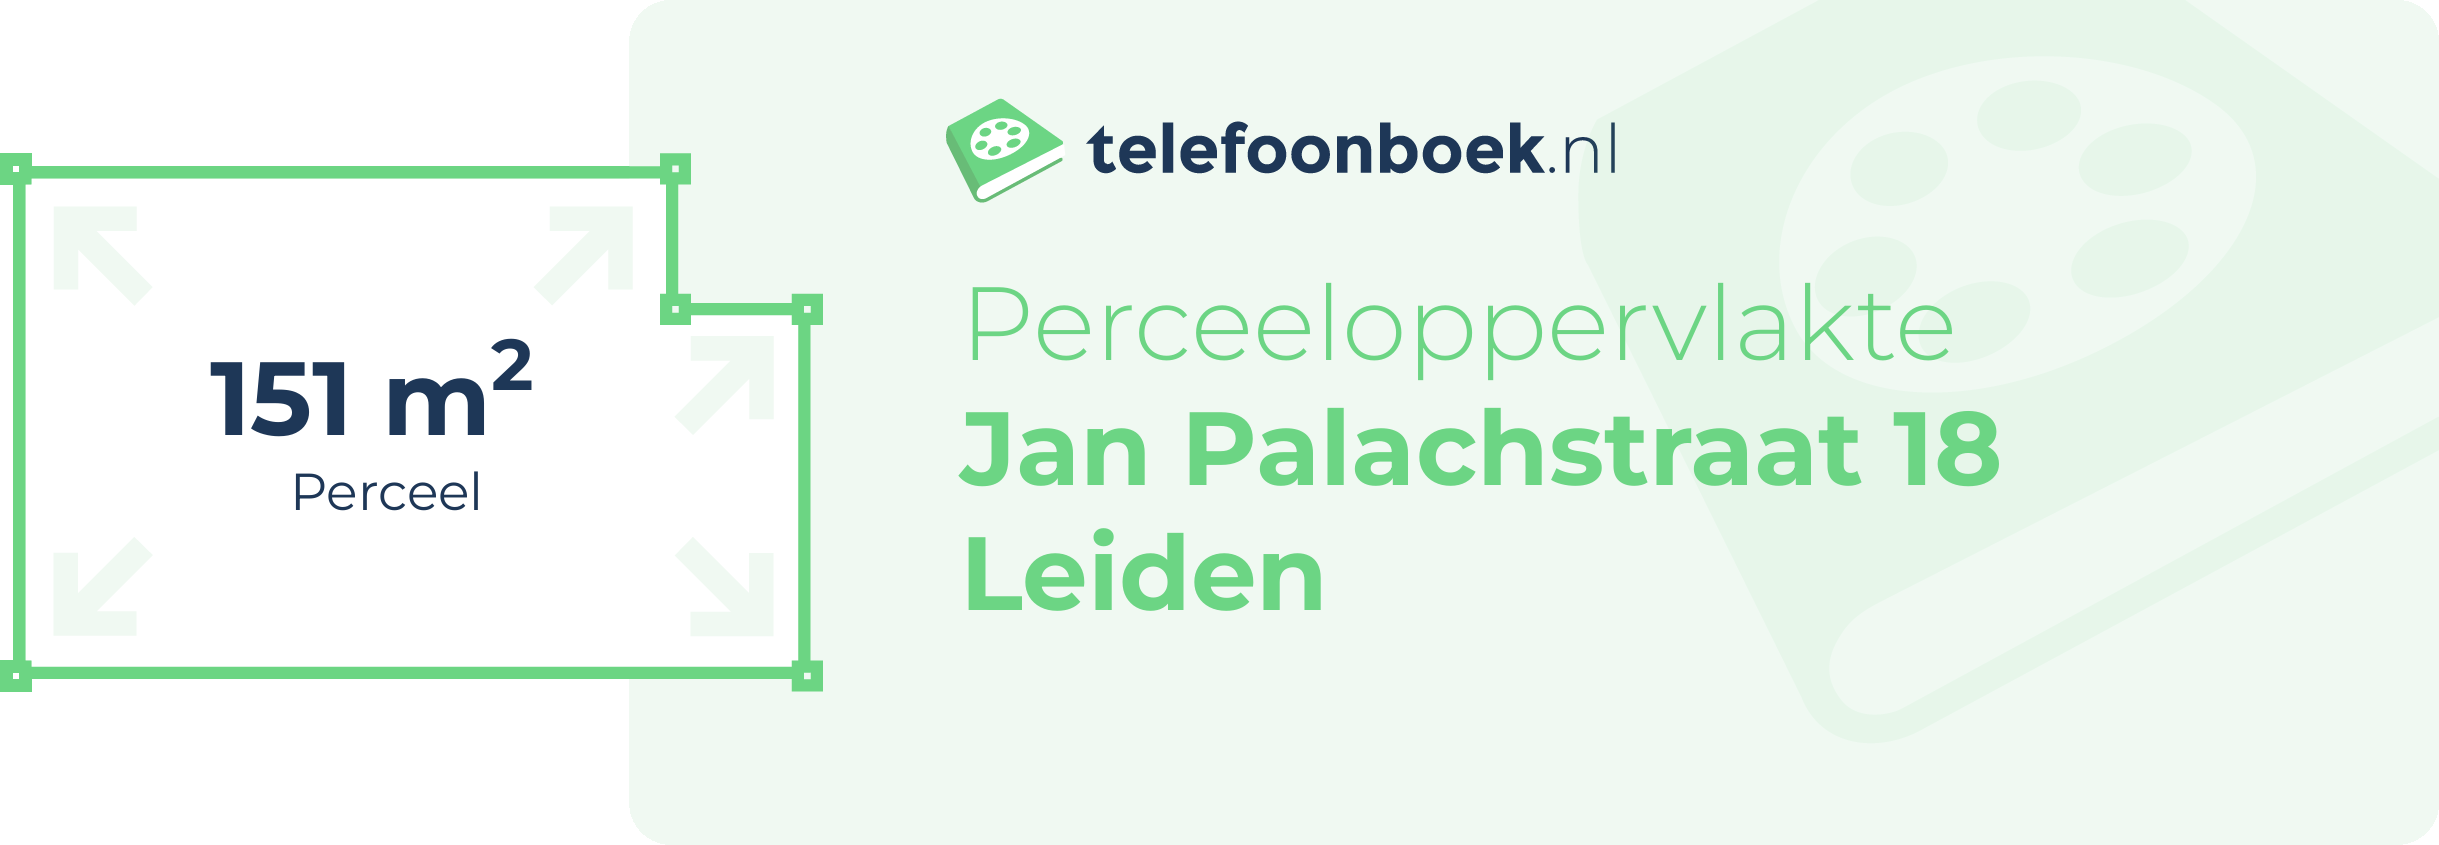 Perceeloppervlakte Jan Palachstraat 18 Leiden